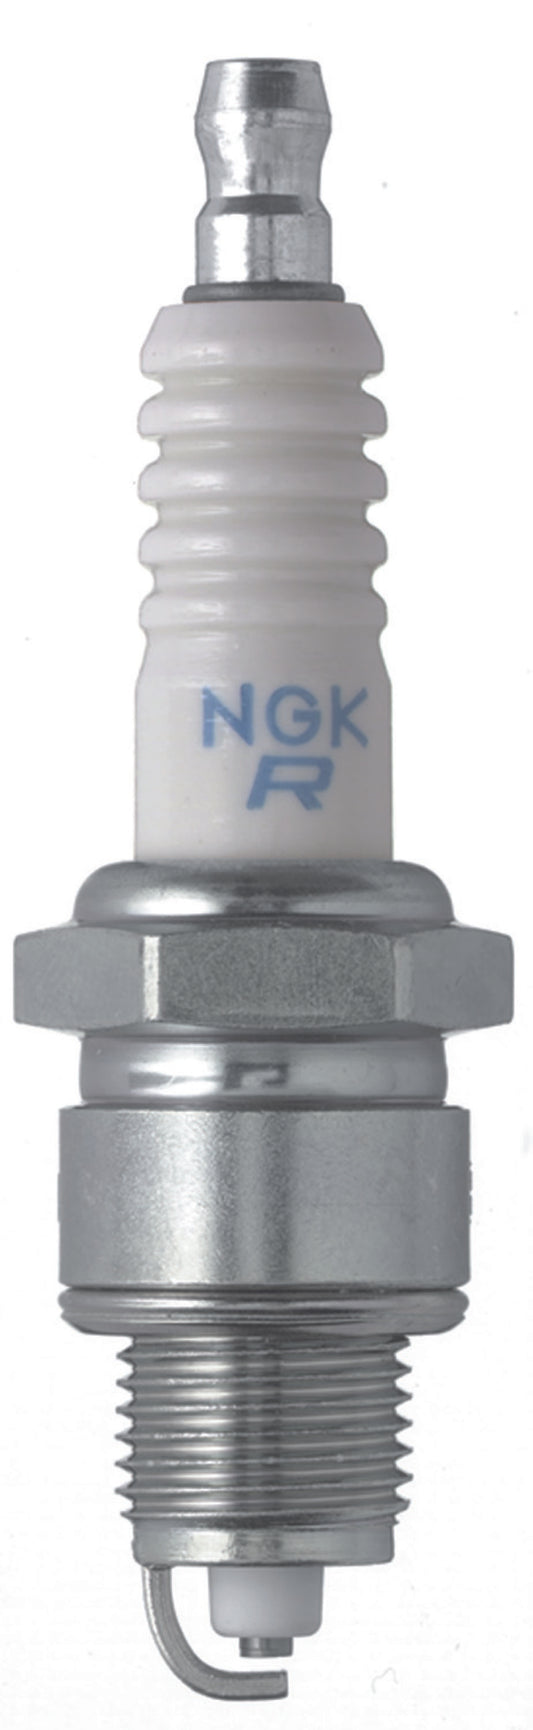 NGK Copper Core Spark Plug Box of 4 (BPR7HS)